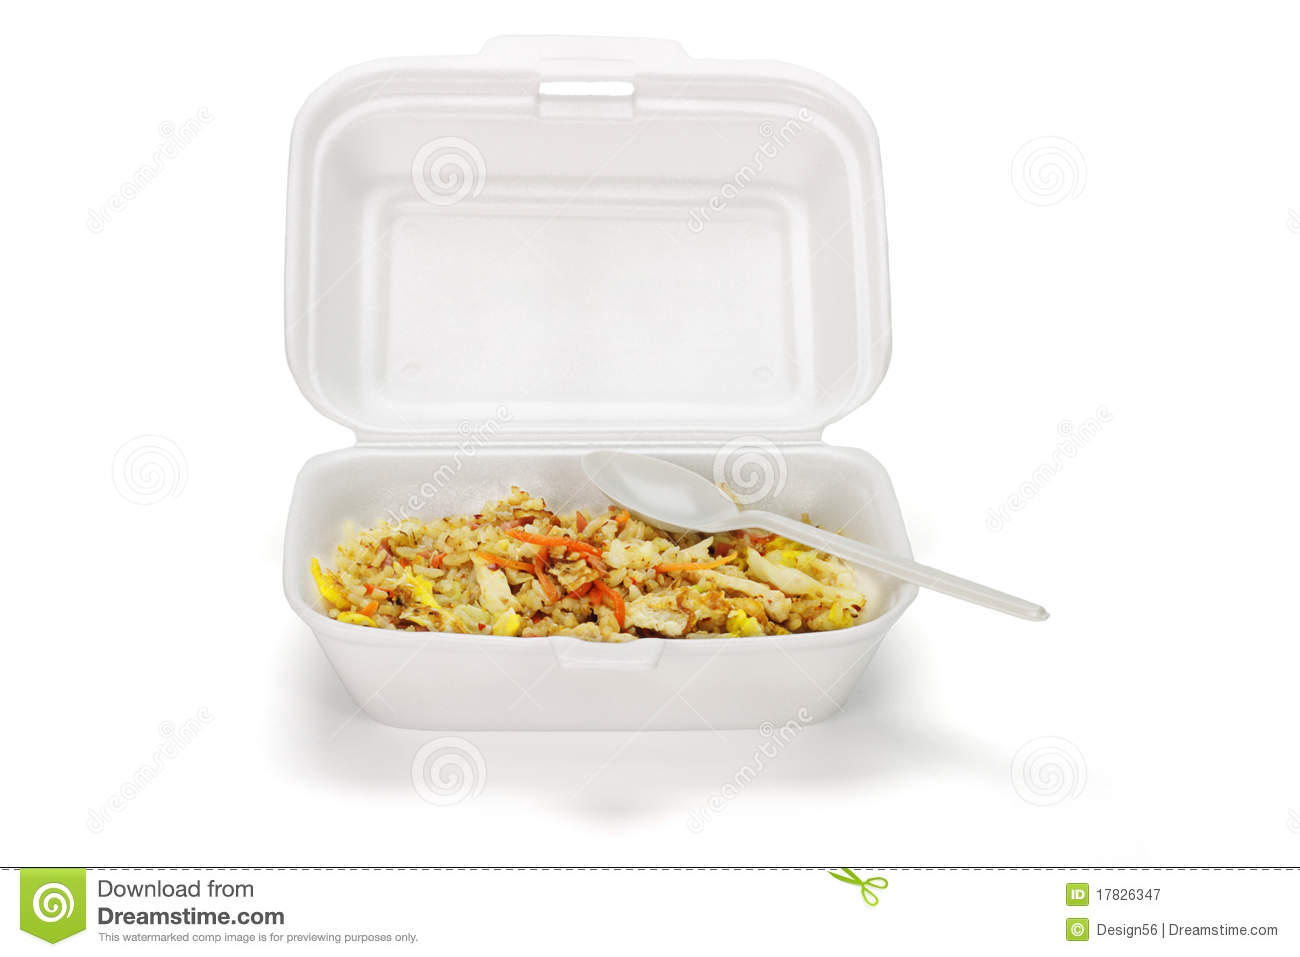 Fried Rice In Styrofoam Box Royalty Free Stock Photography   Image